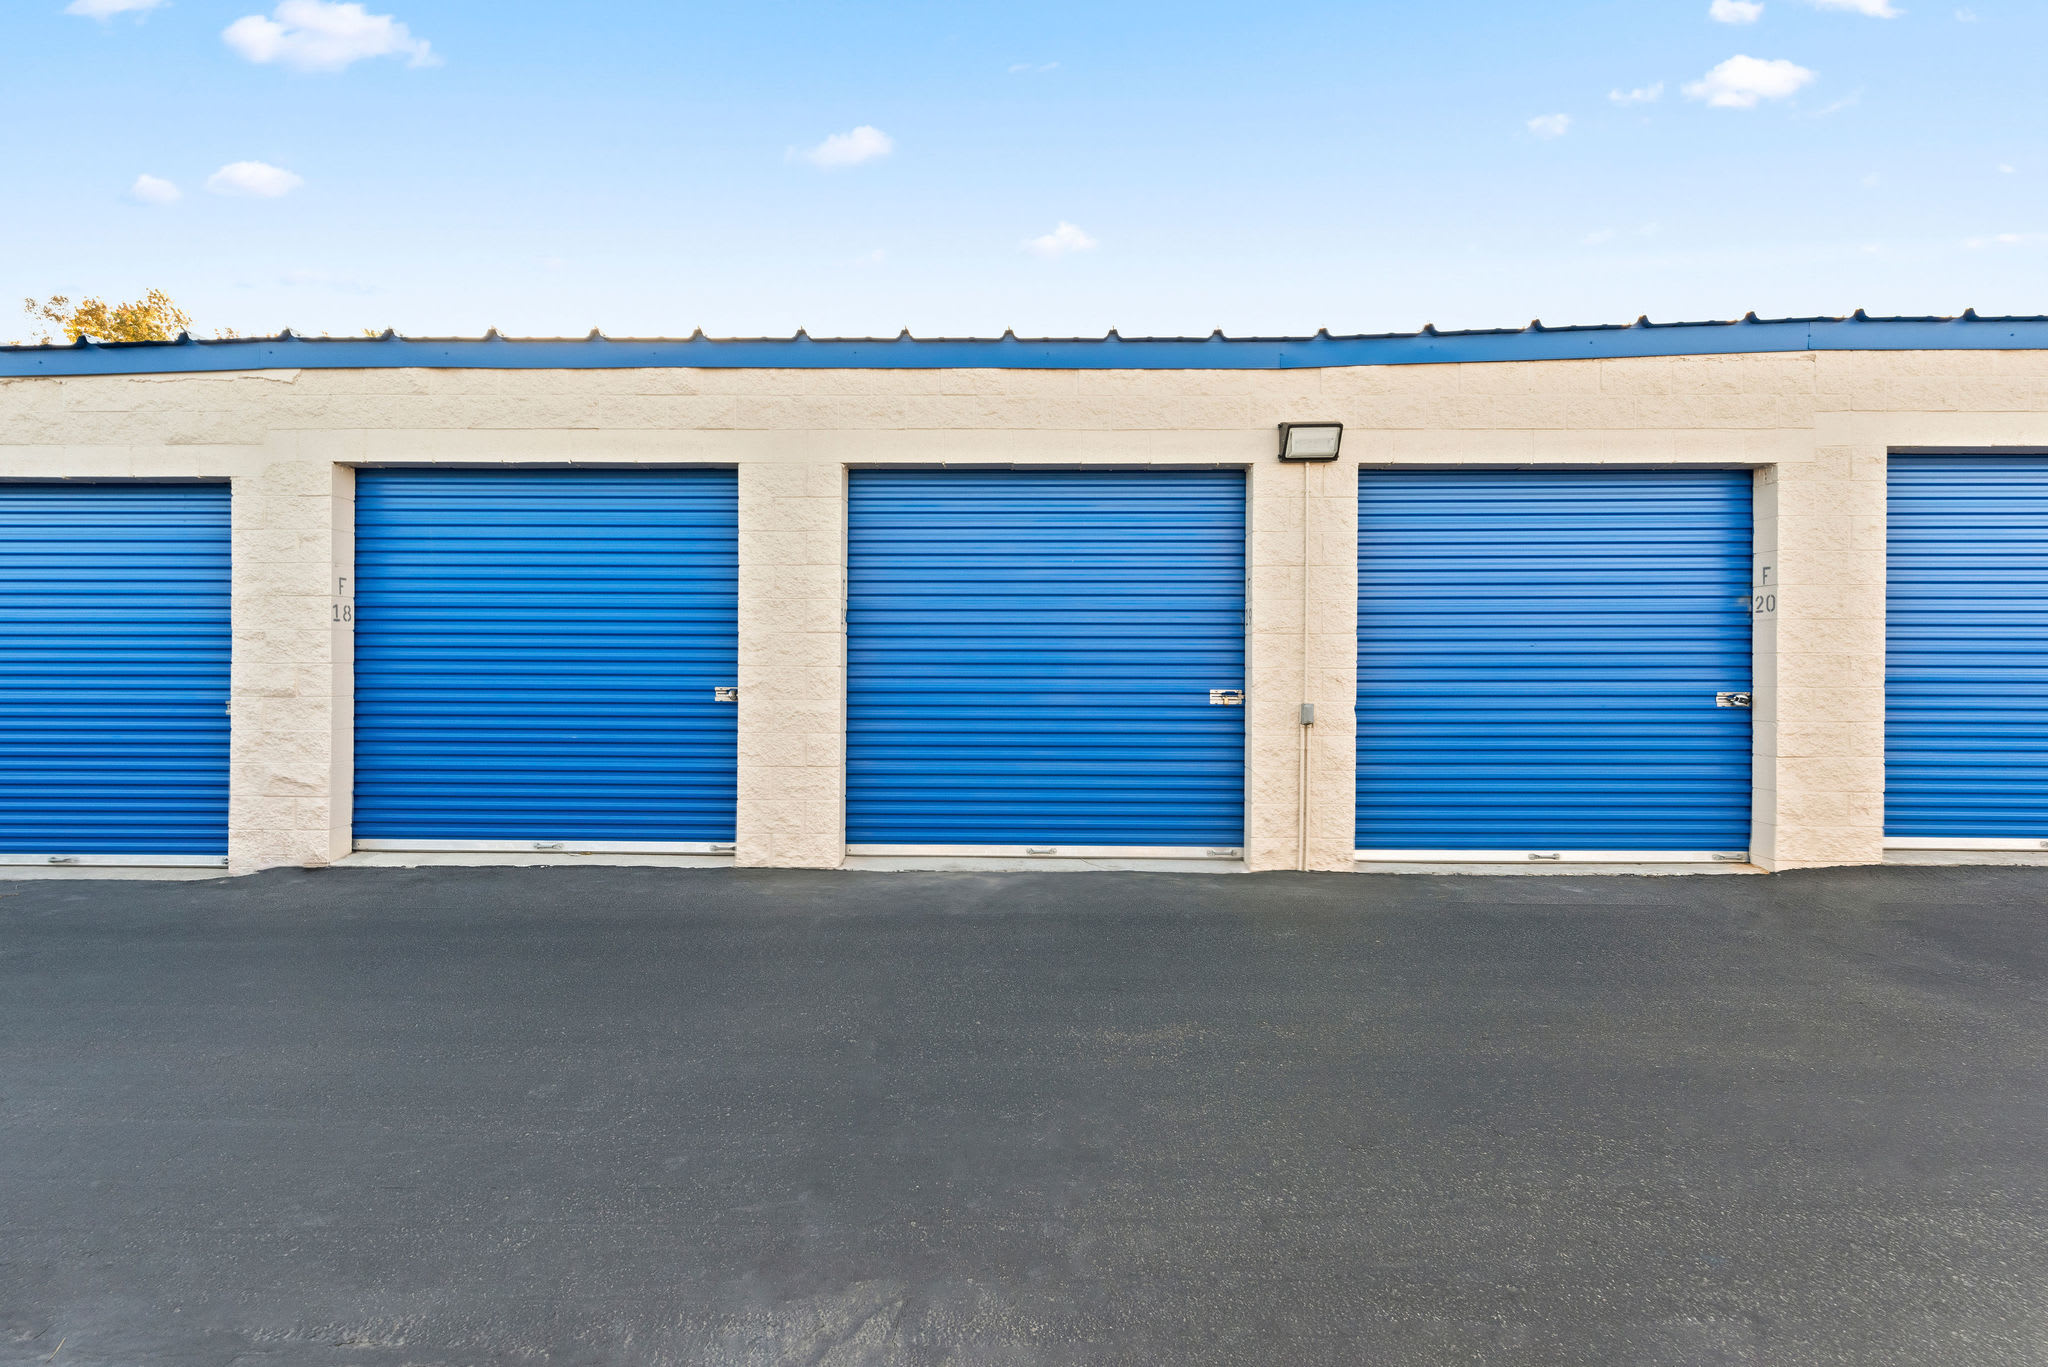 A storage unit doorway closed at Stor'em Self Storage in Lehi, Utah